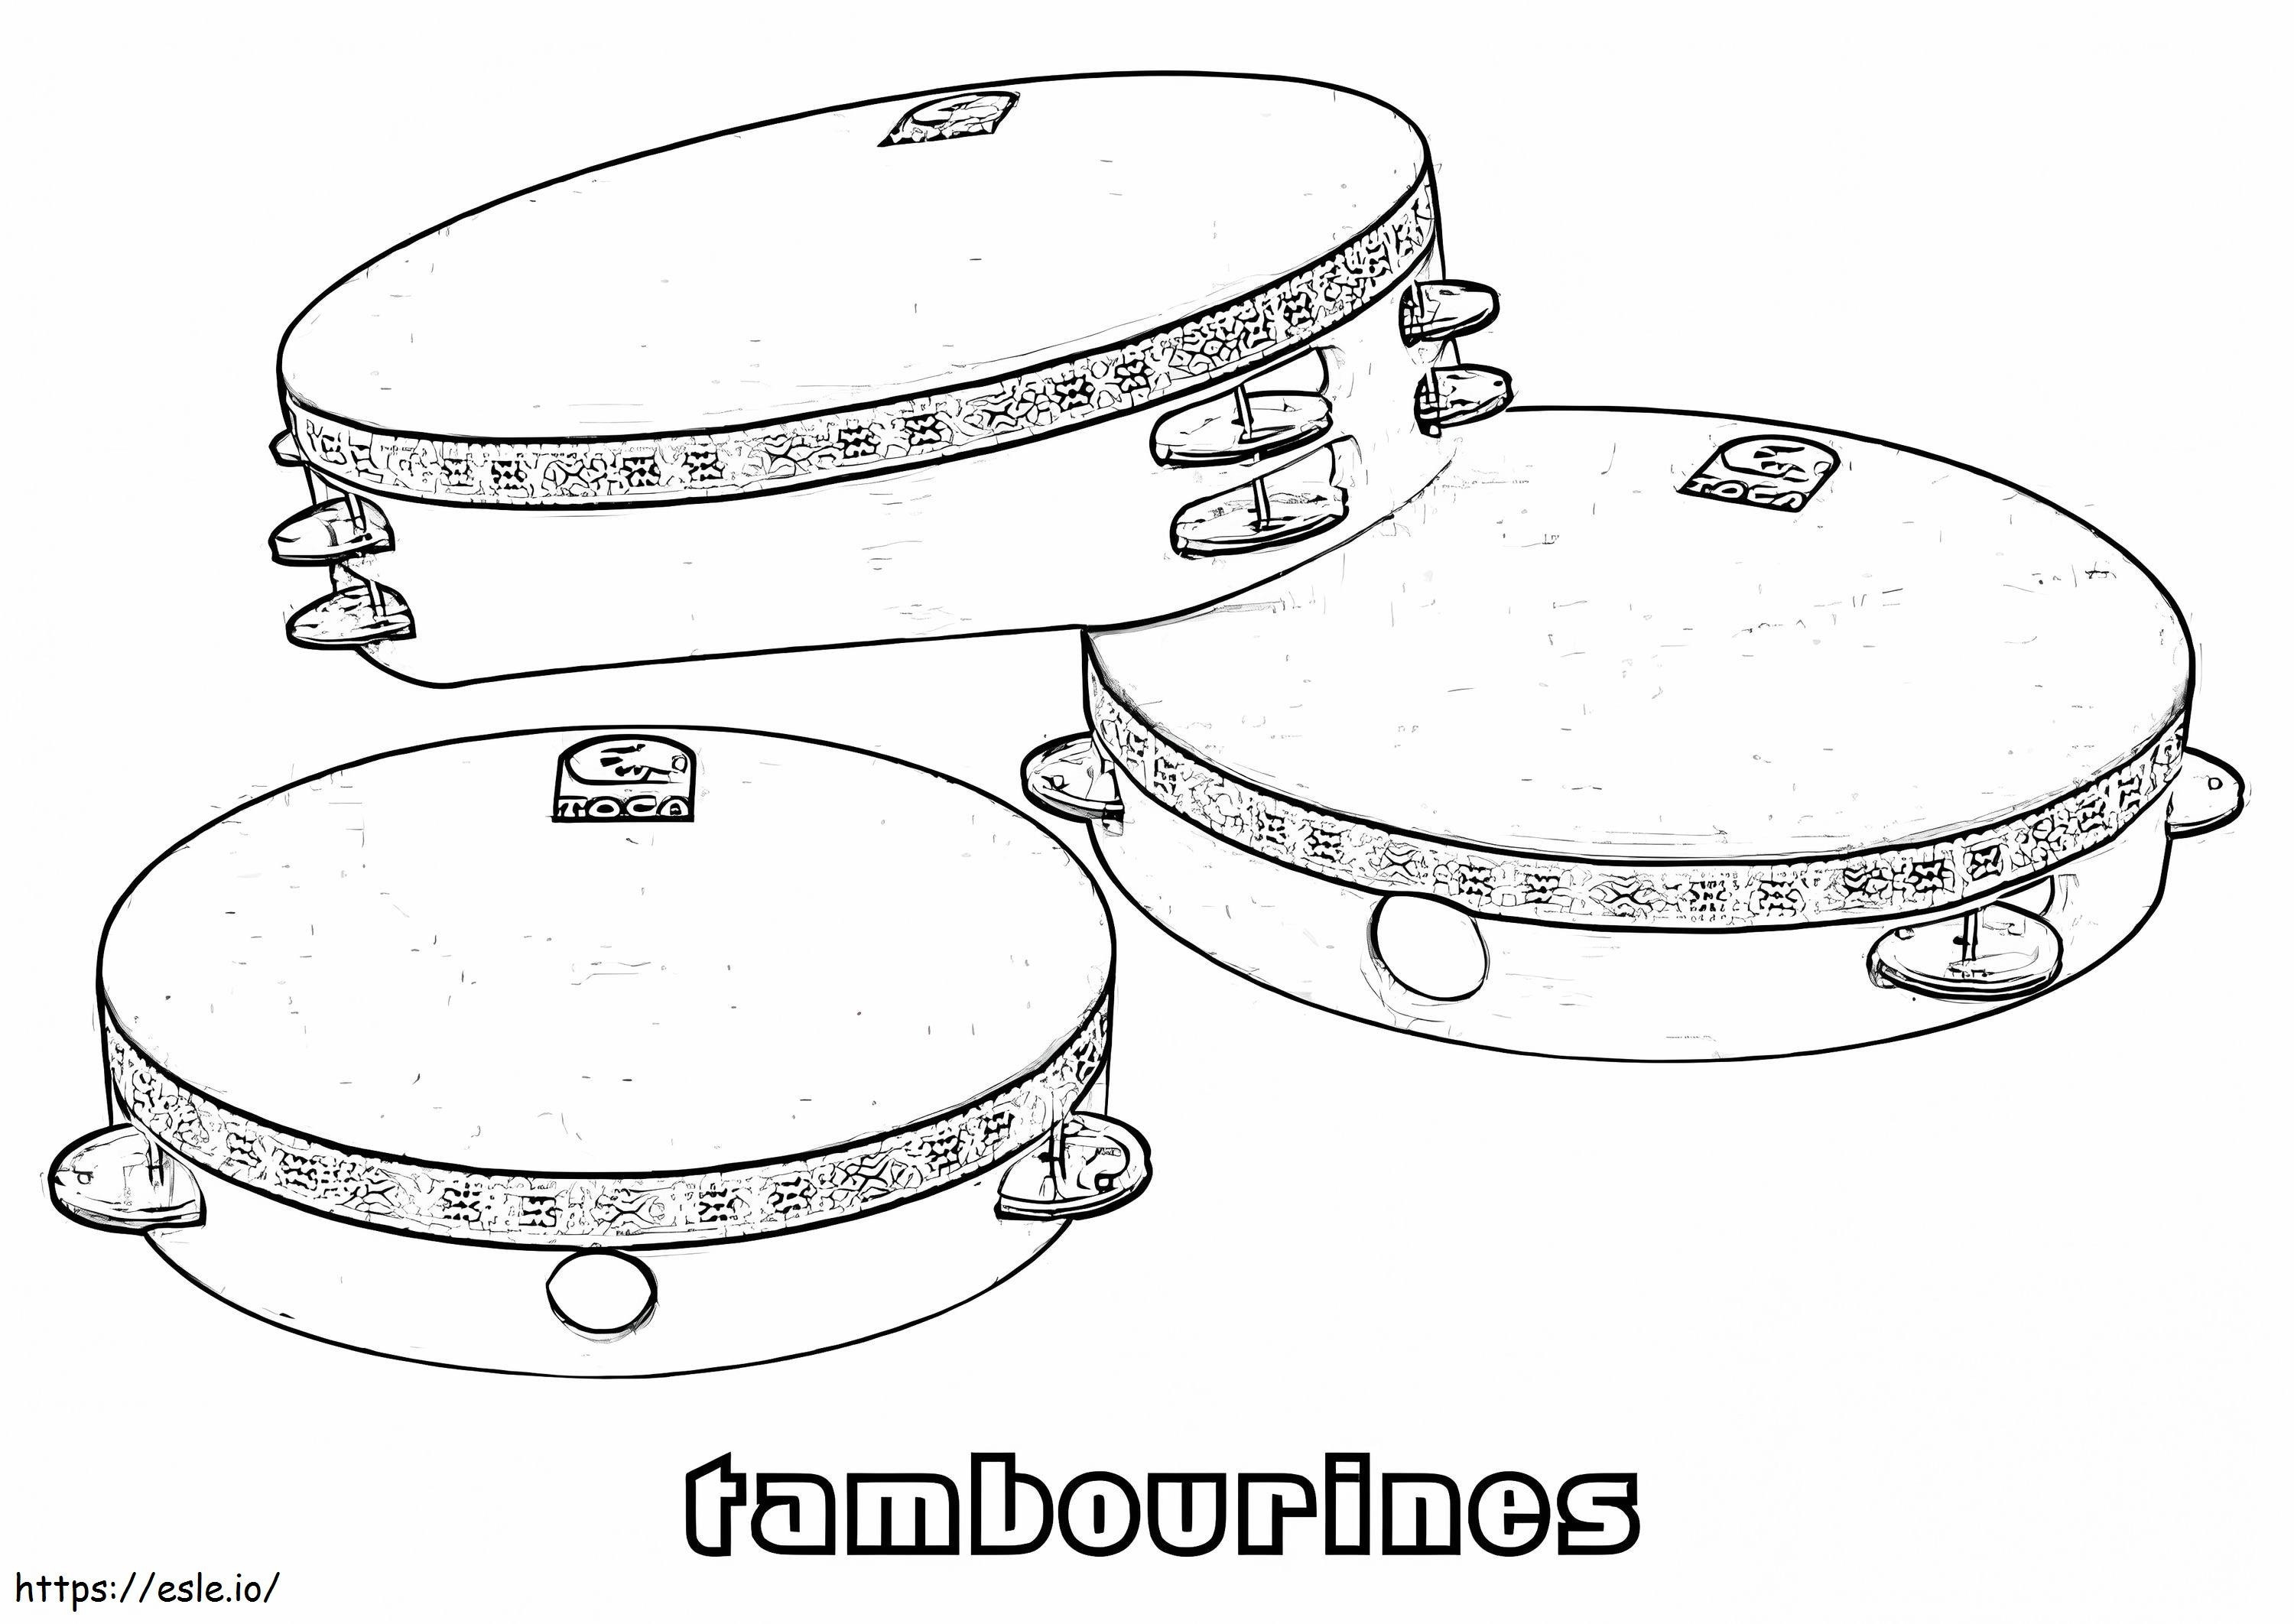 Kolme tamburiinia värityskuva